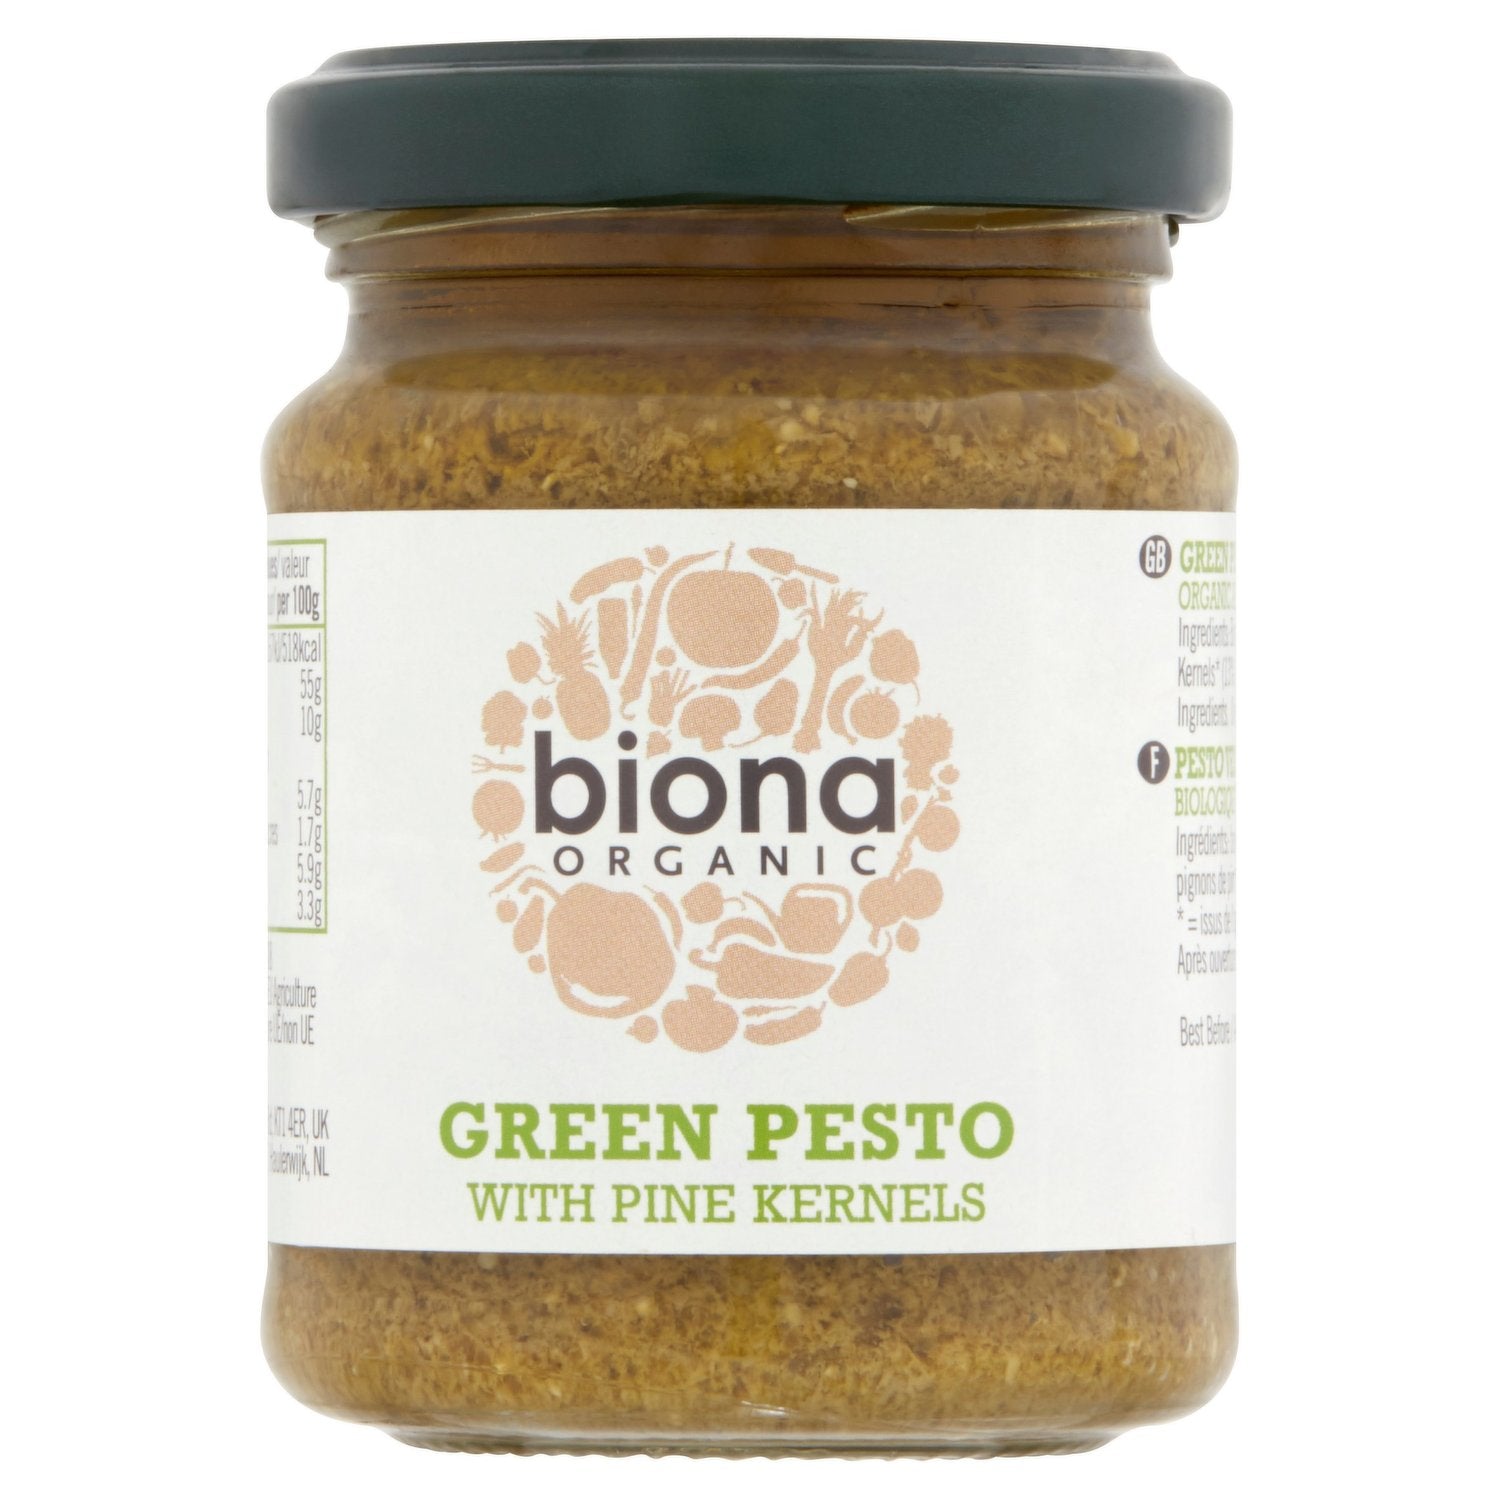 Biona Organic Green Pesto